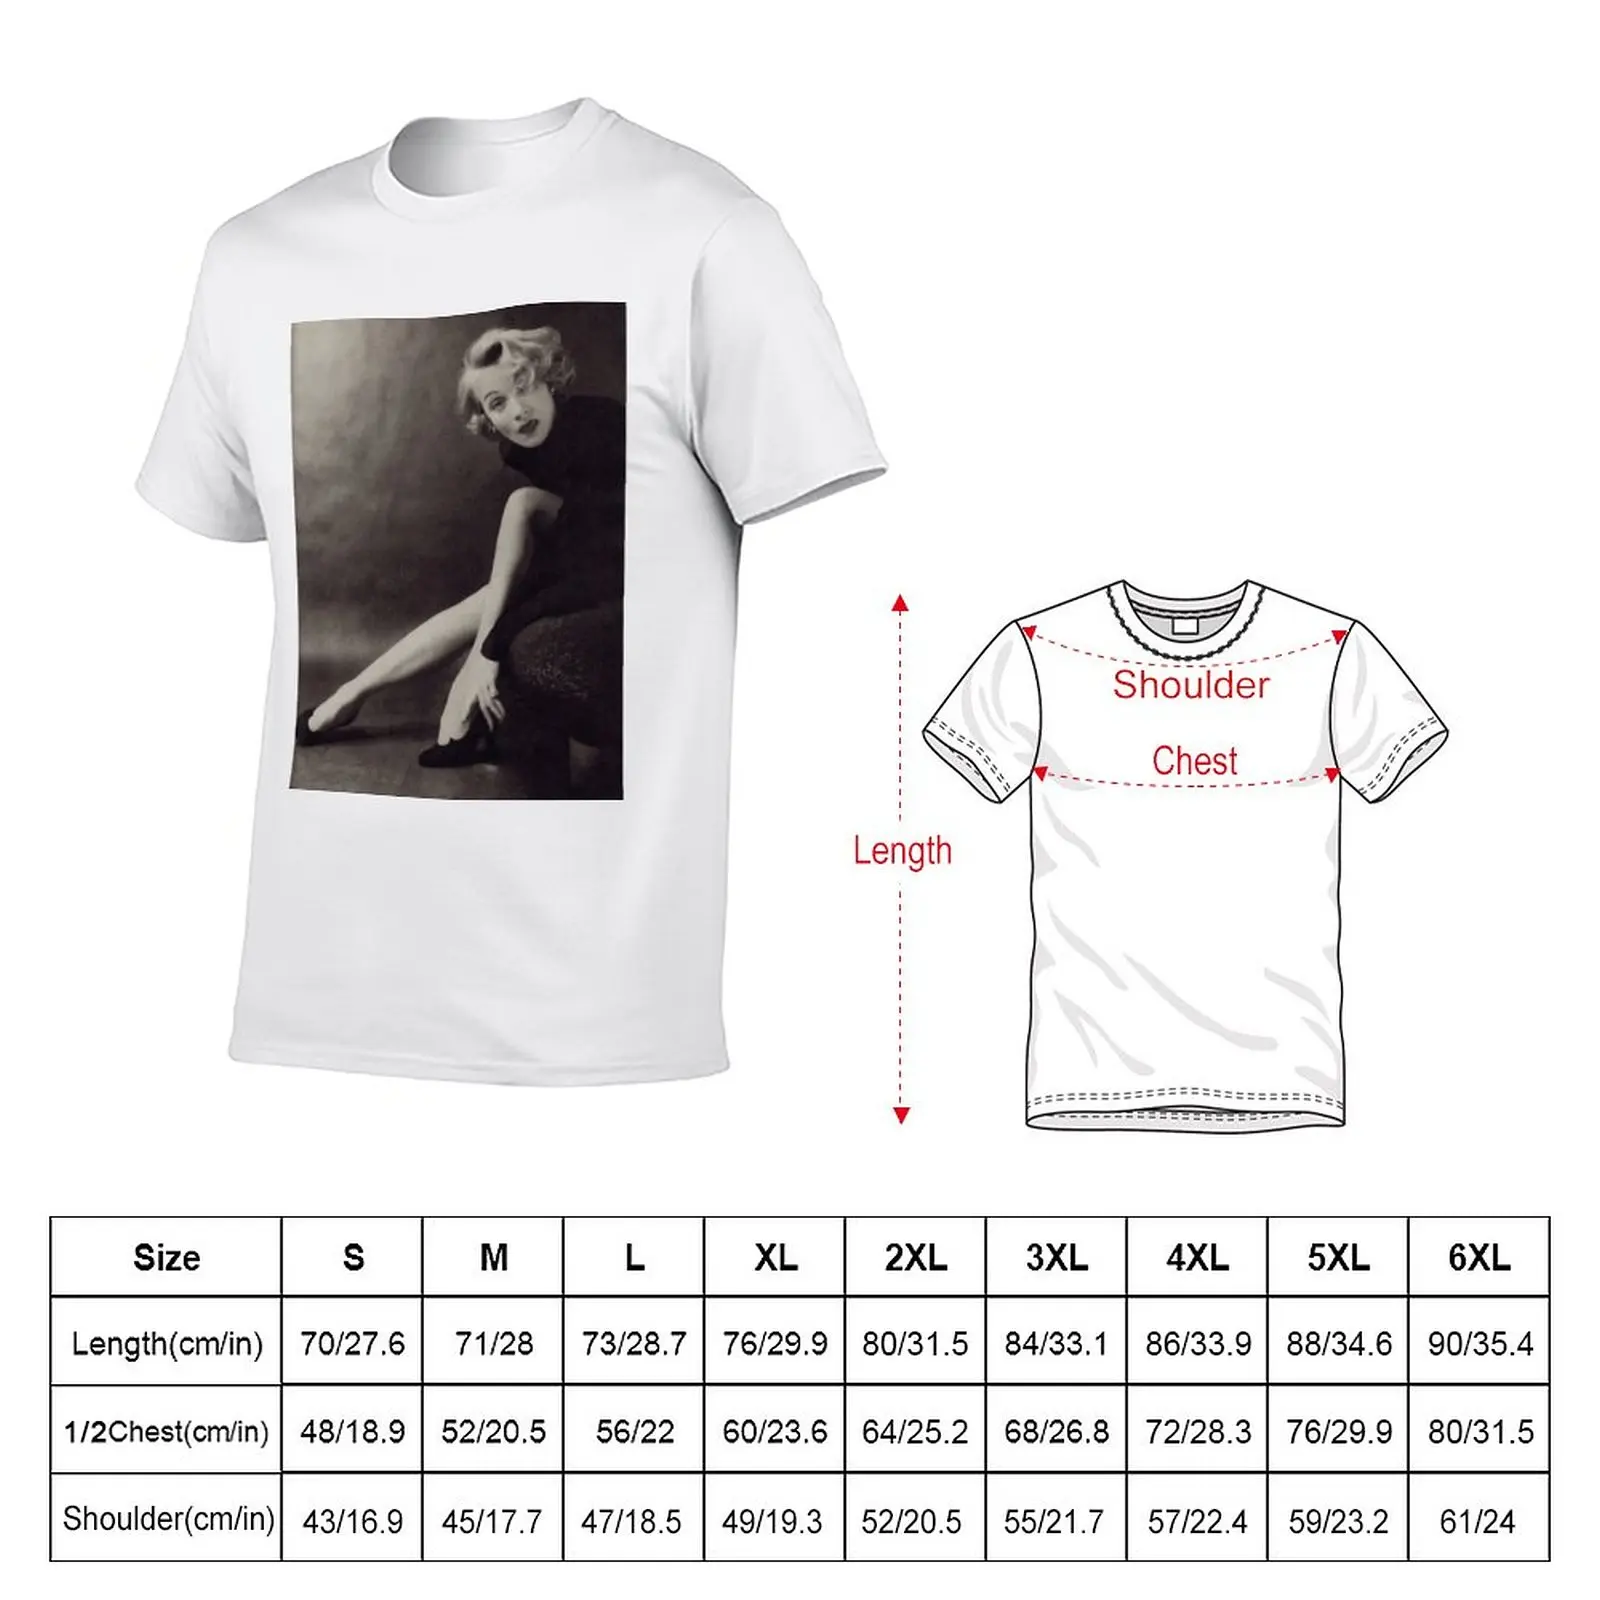 New Marlene Dietrich T-Shirt sports fan t-shirts black t shirts t shirts for men cotton